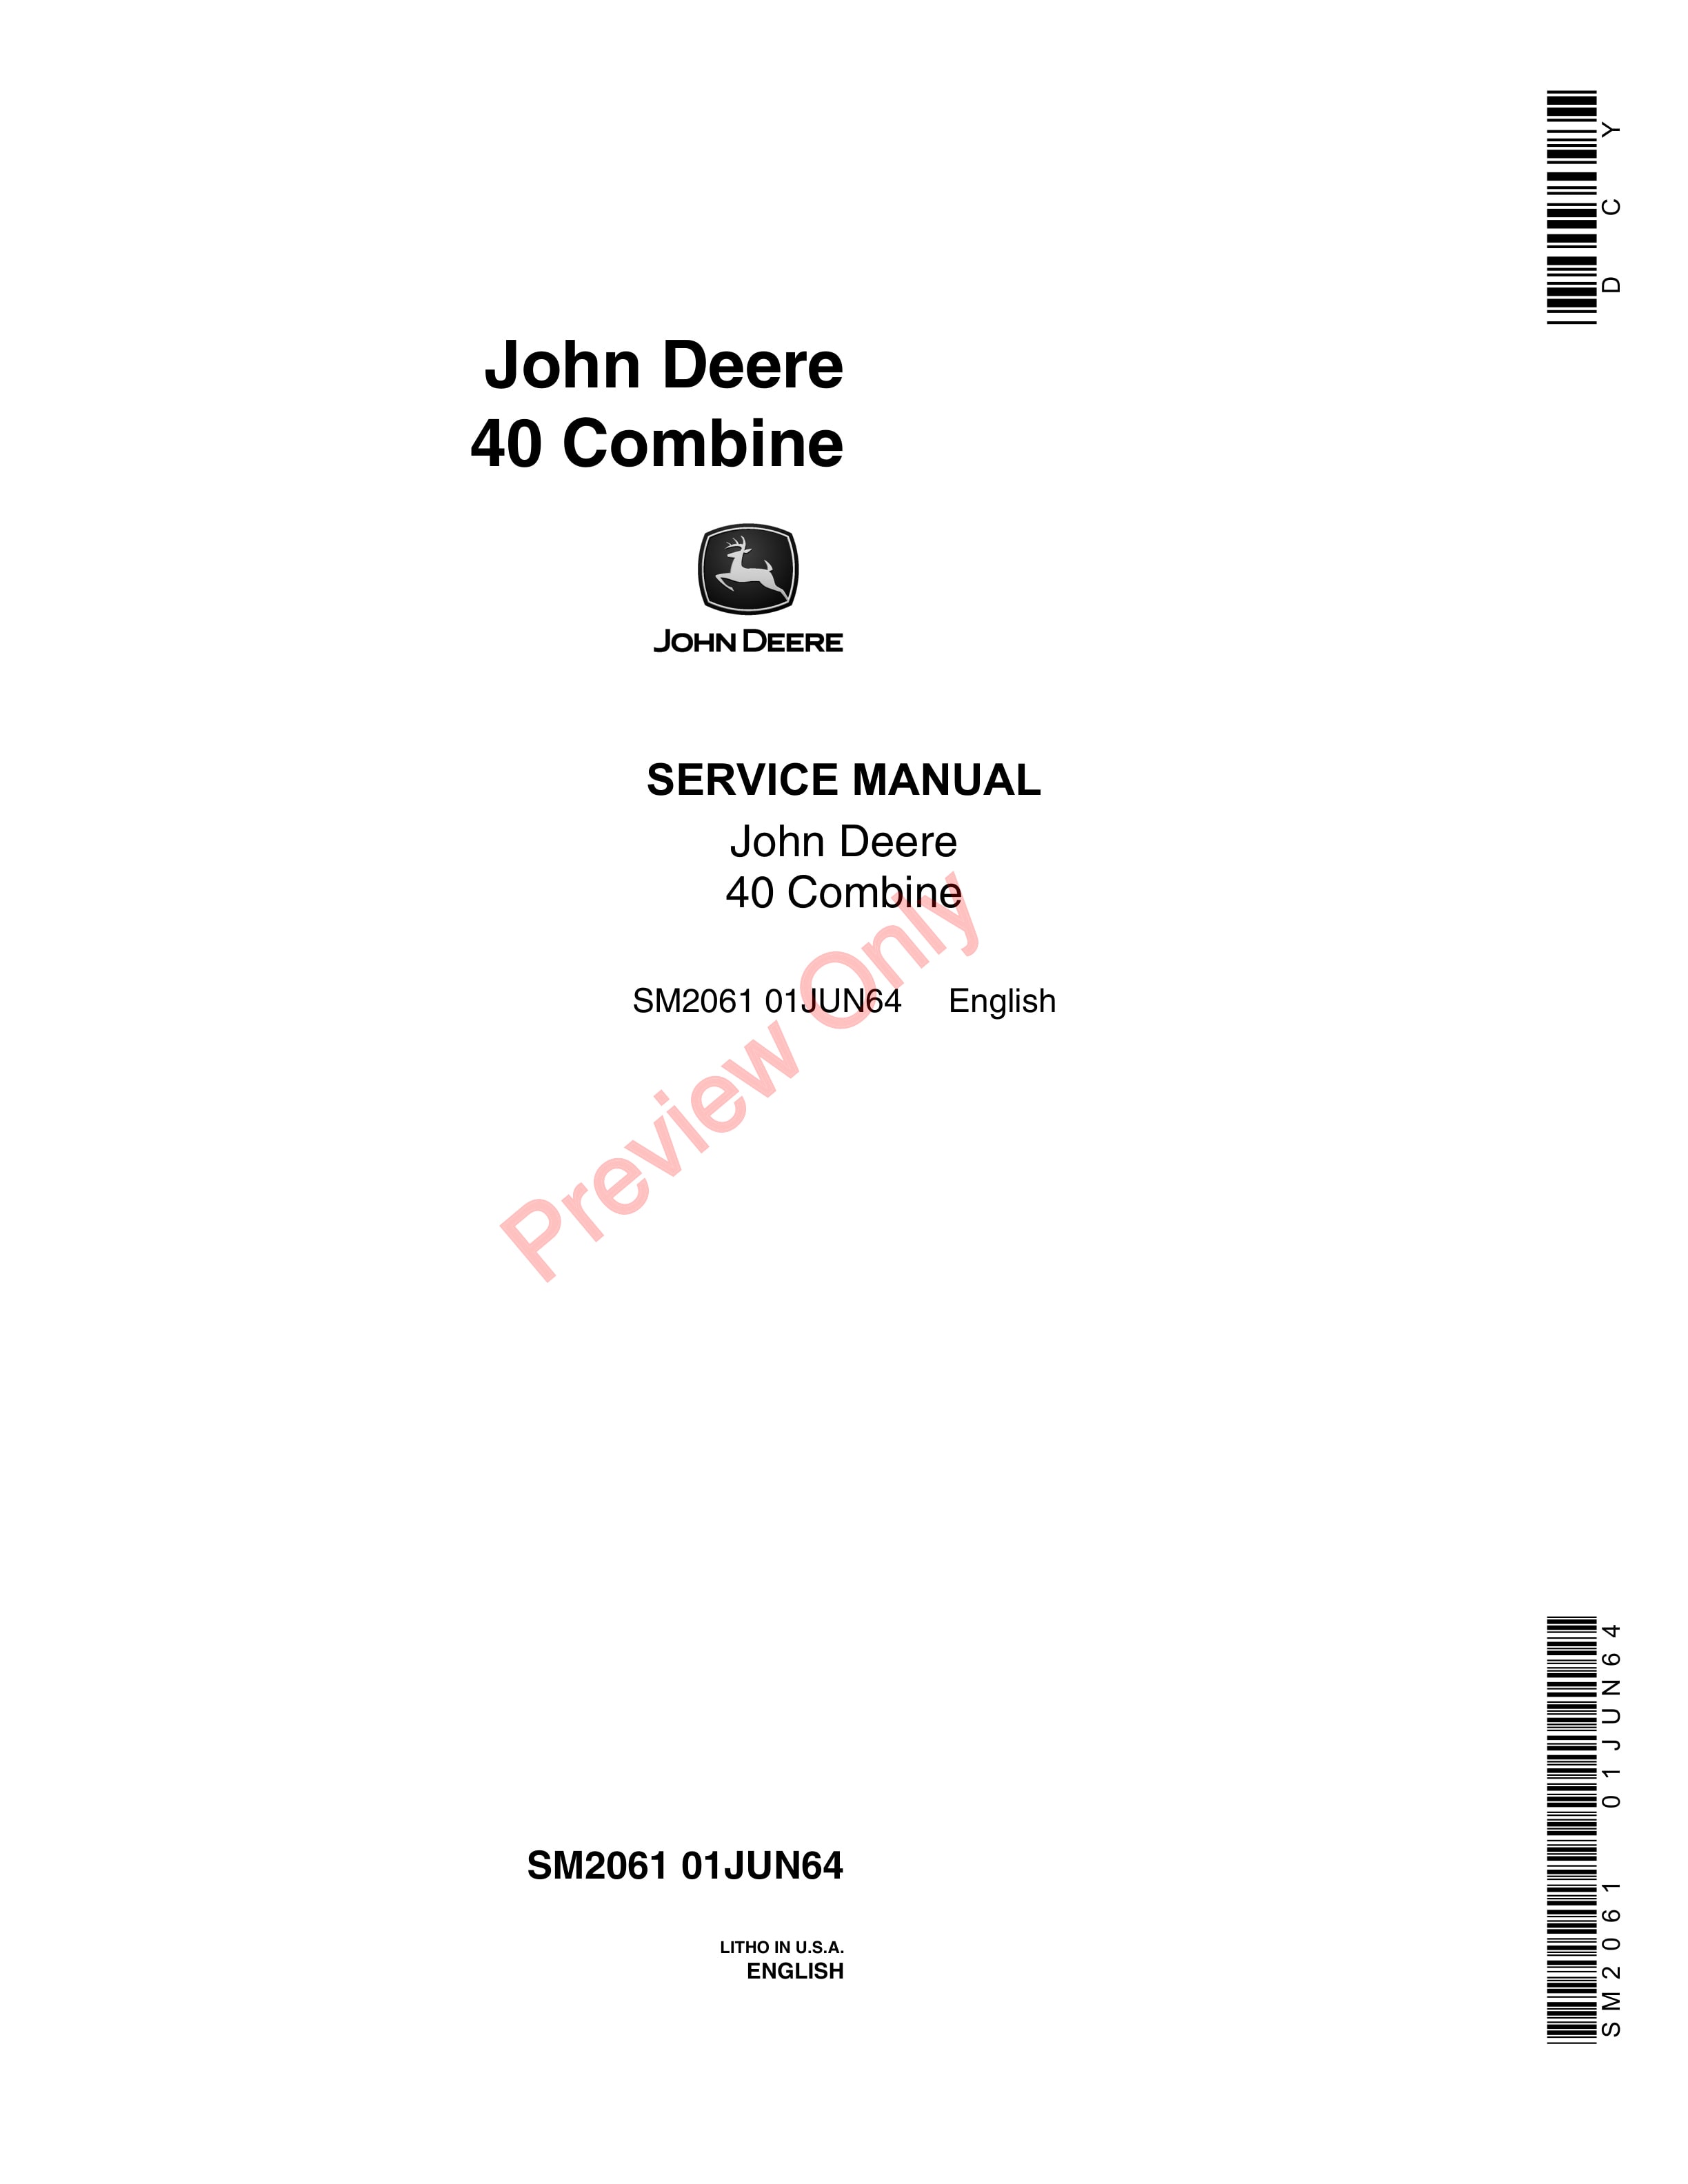 John Deere 40 Combine Service Manual SM2061 01JUN64-1